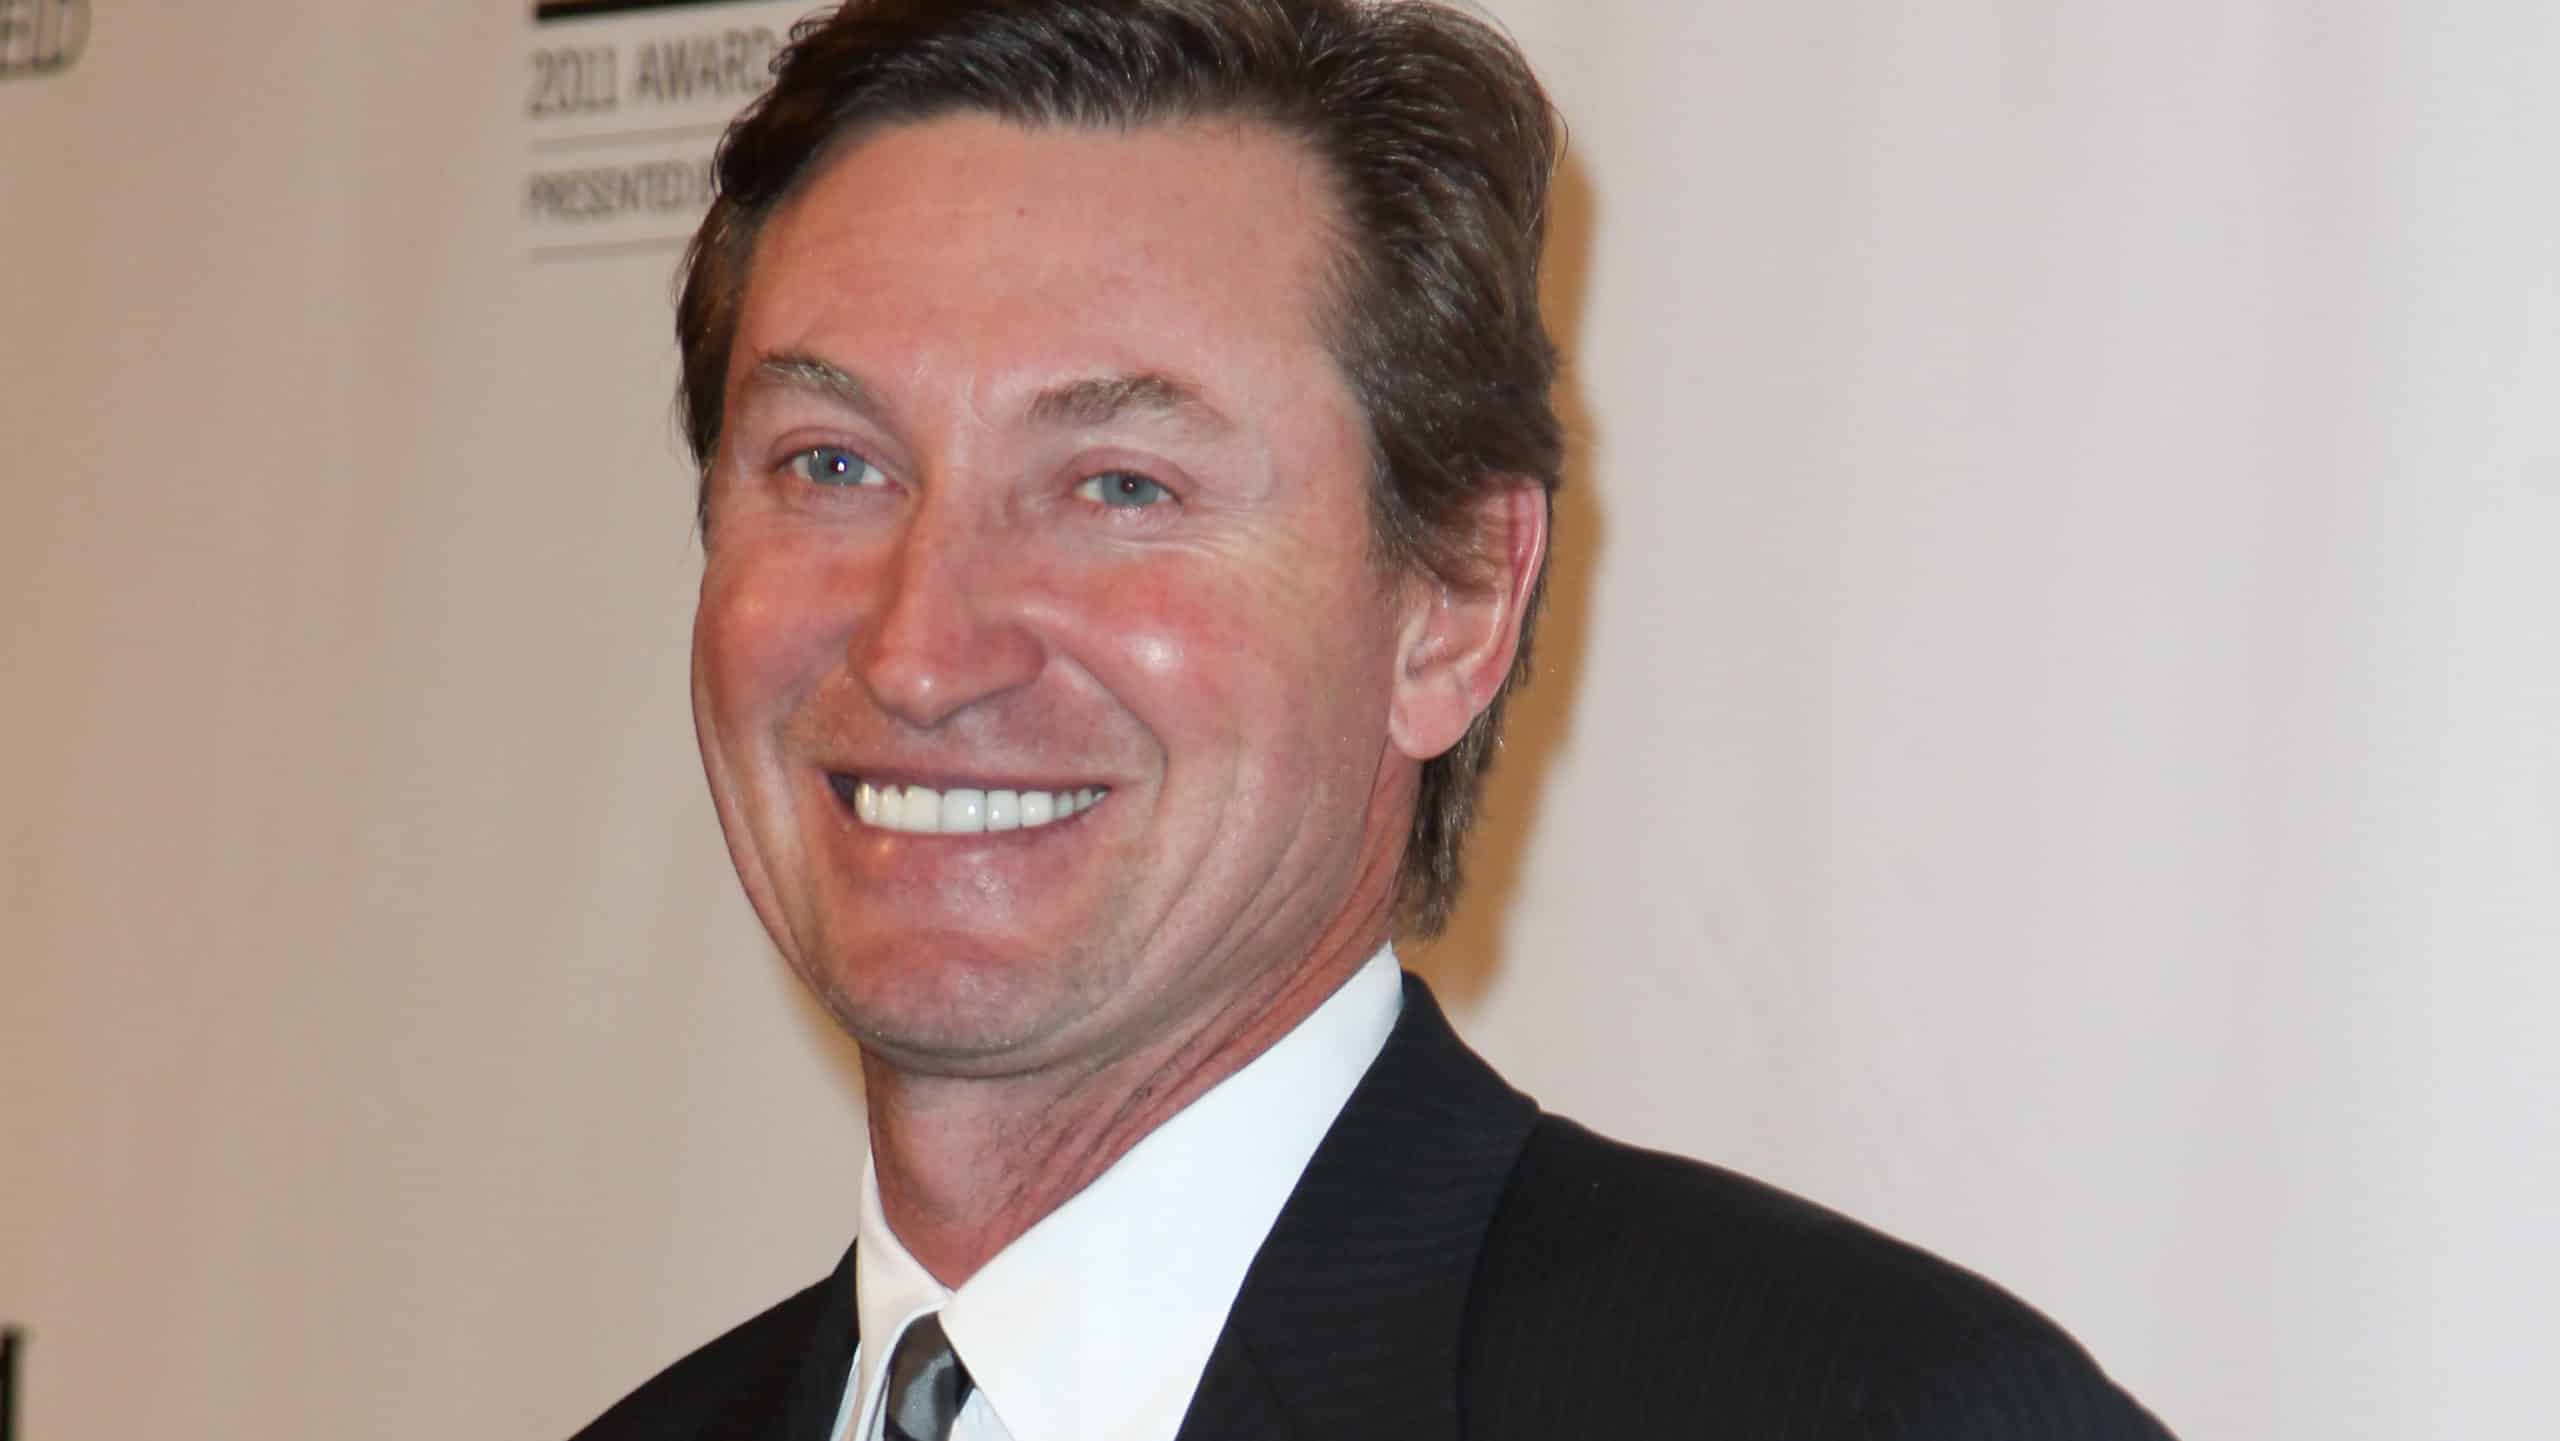 New York Ny December 6: Wayne Gretzky Attends The